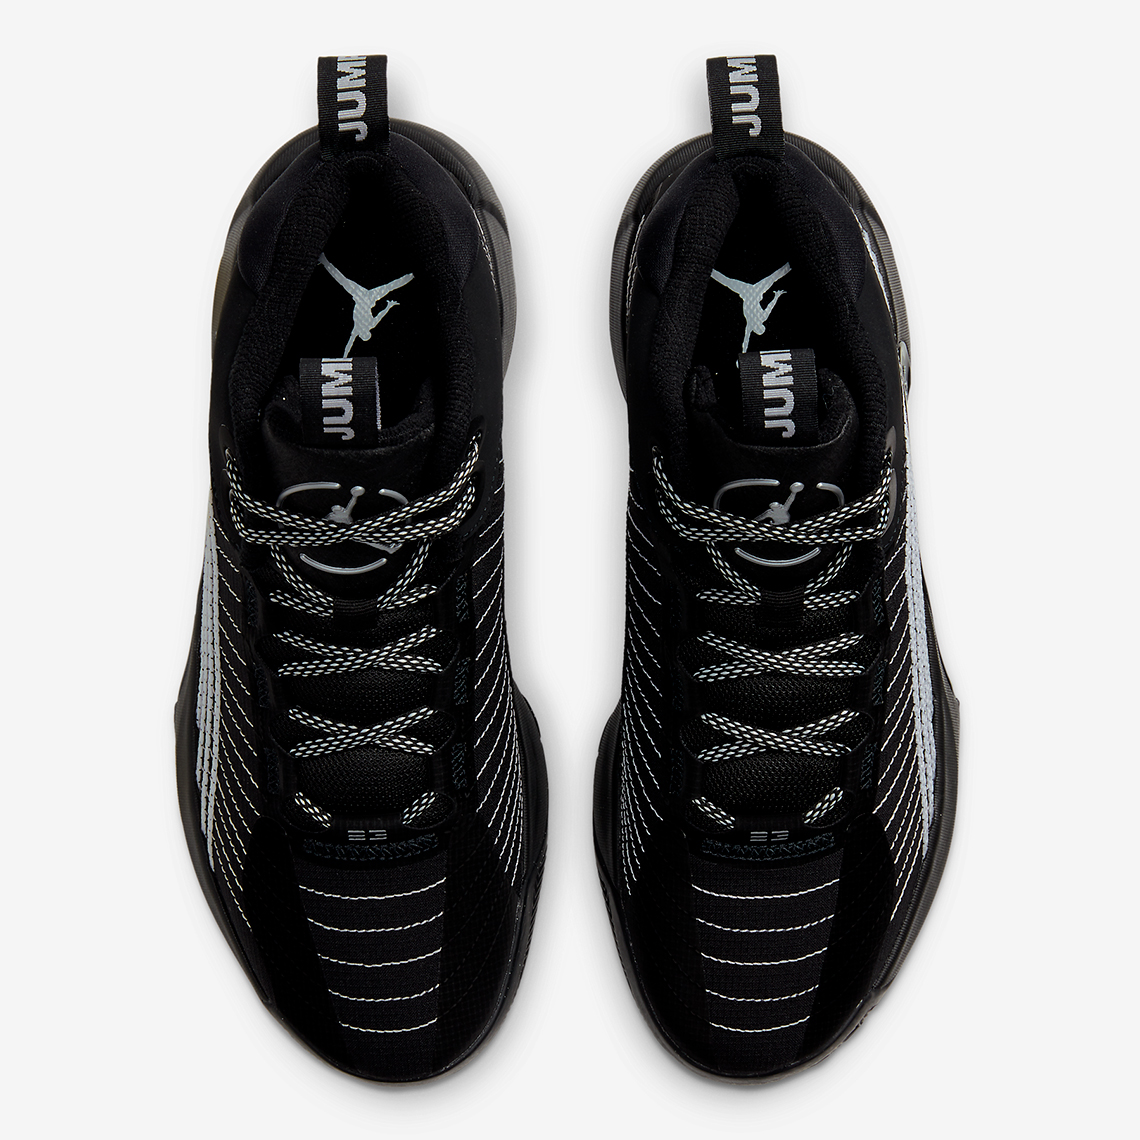 Air Jordan Shoes 2020 Cq4021 001 5